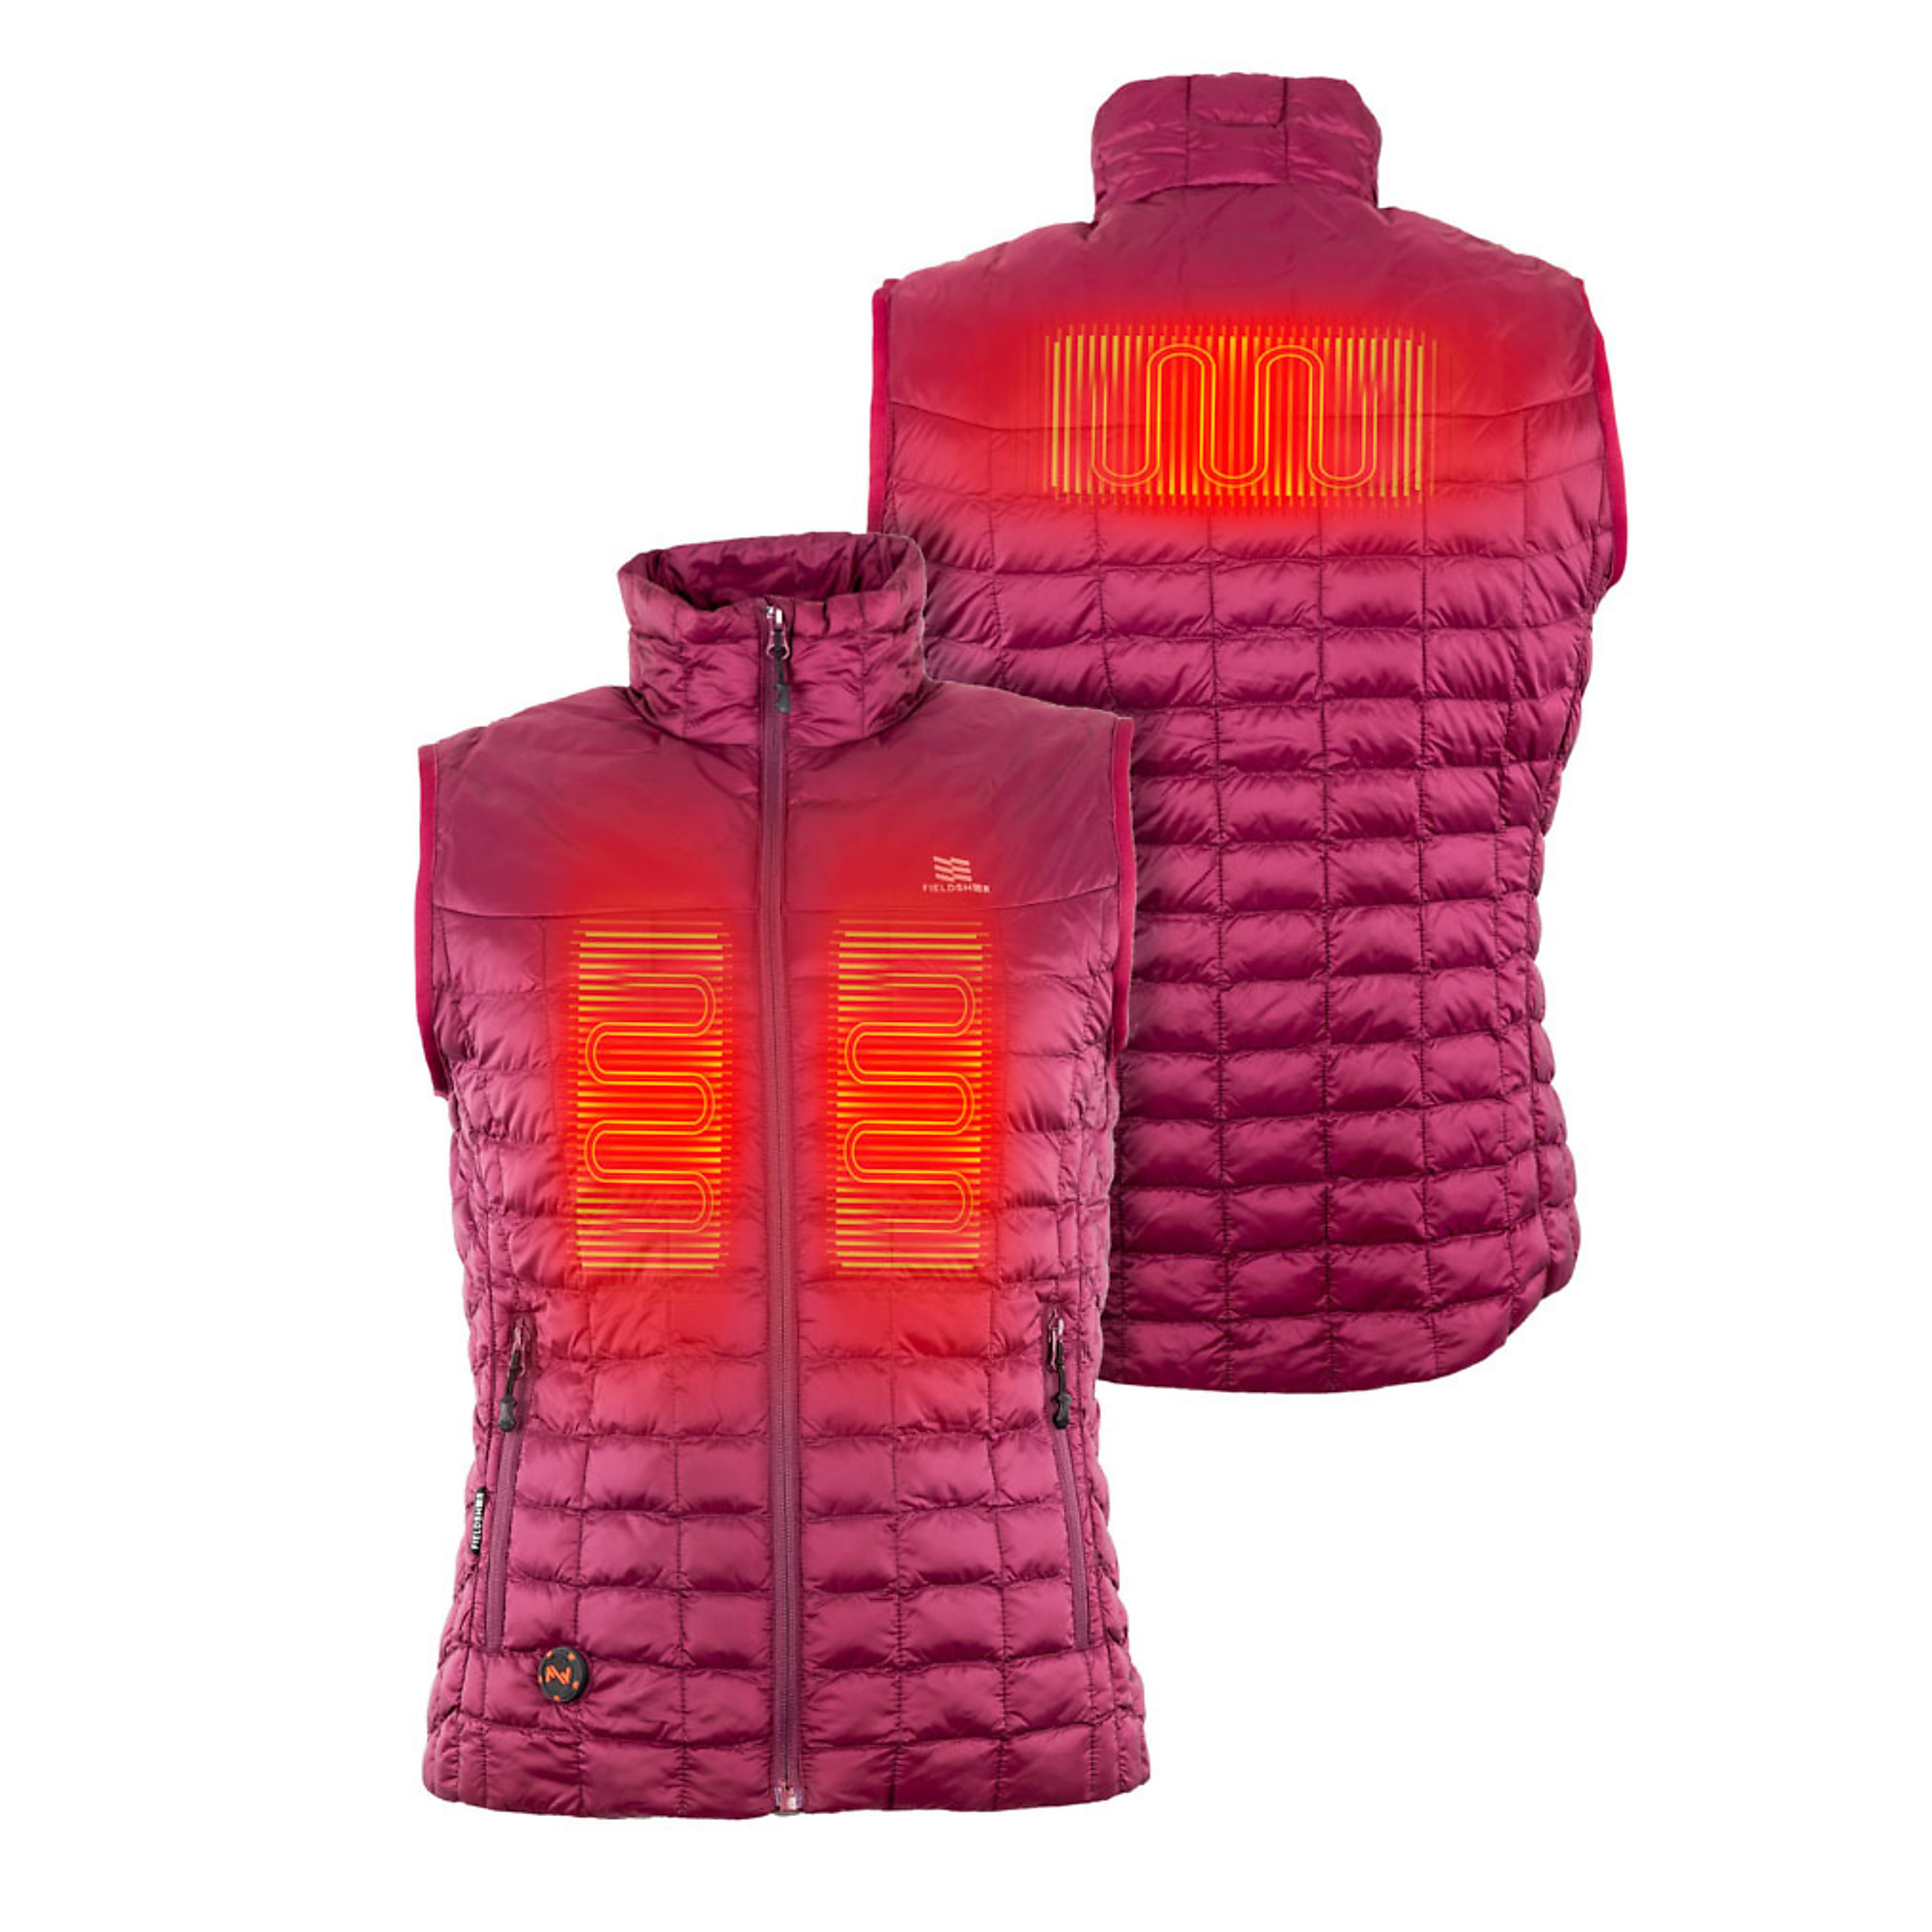 Fieldsheer, Women's 7.4v Backcountry Heated Vest, Size L, Color Red, Model MWWV04310420